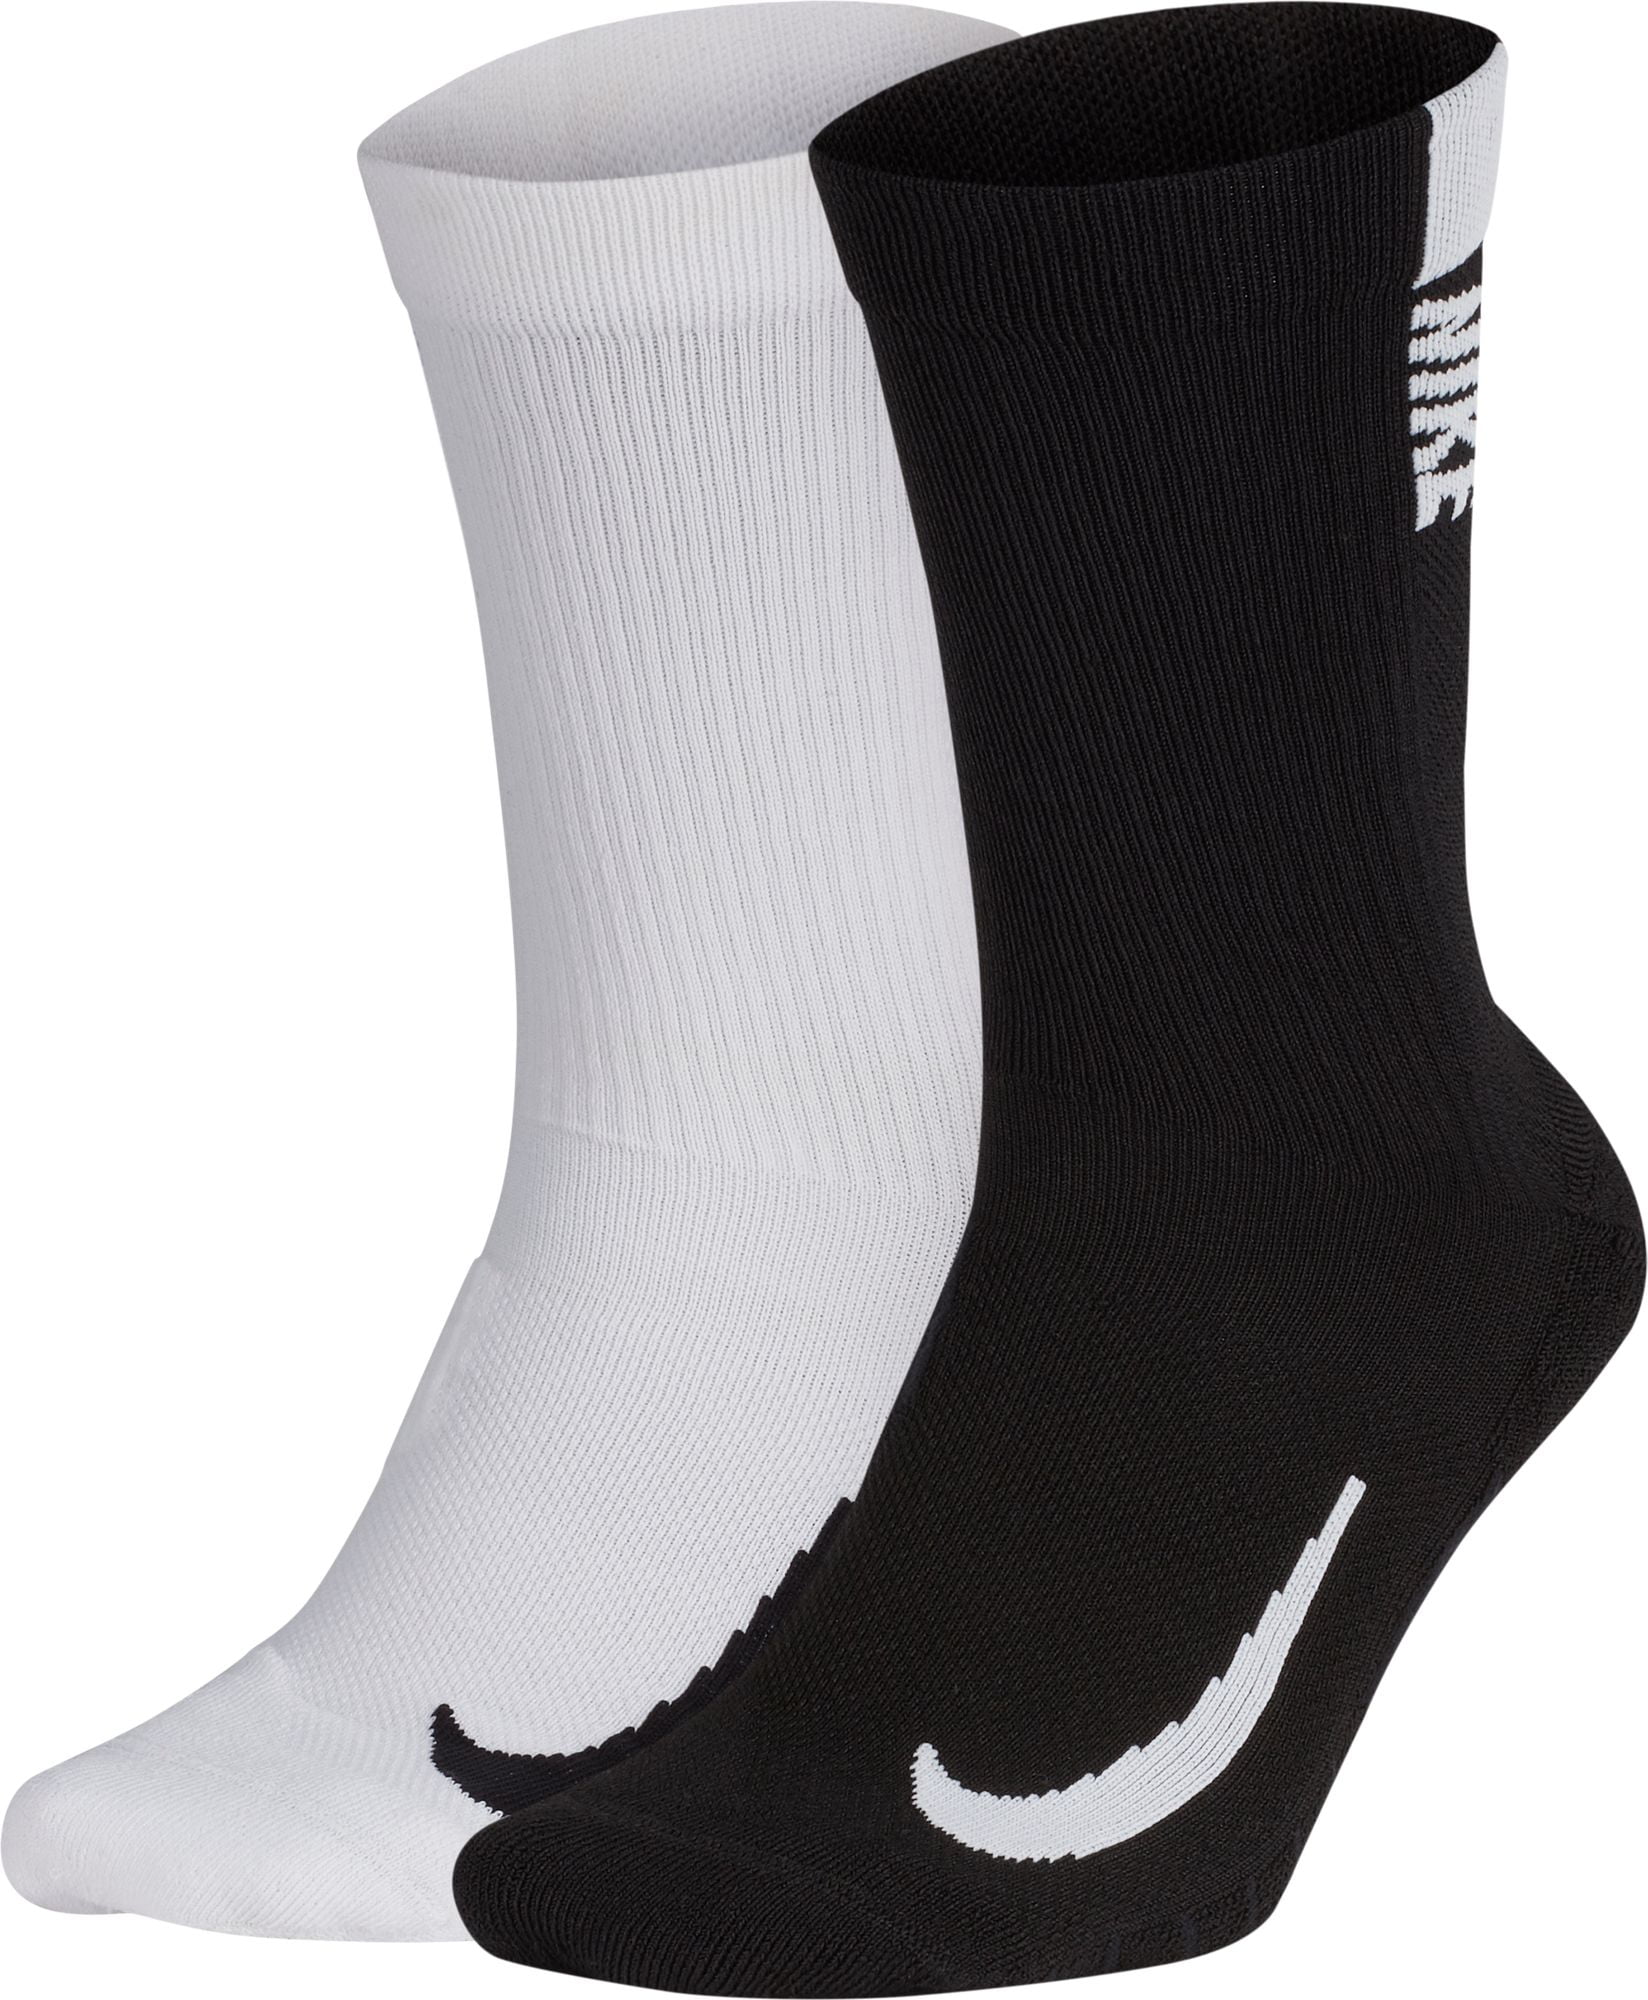 Nike - Nike Multiplier Crew Socks 2-Pack - Walmart.com - Walmart.com